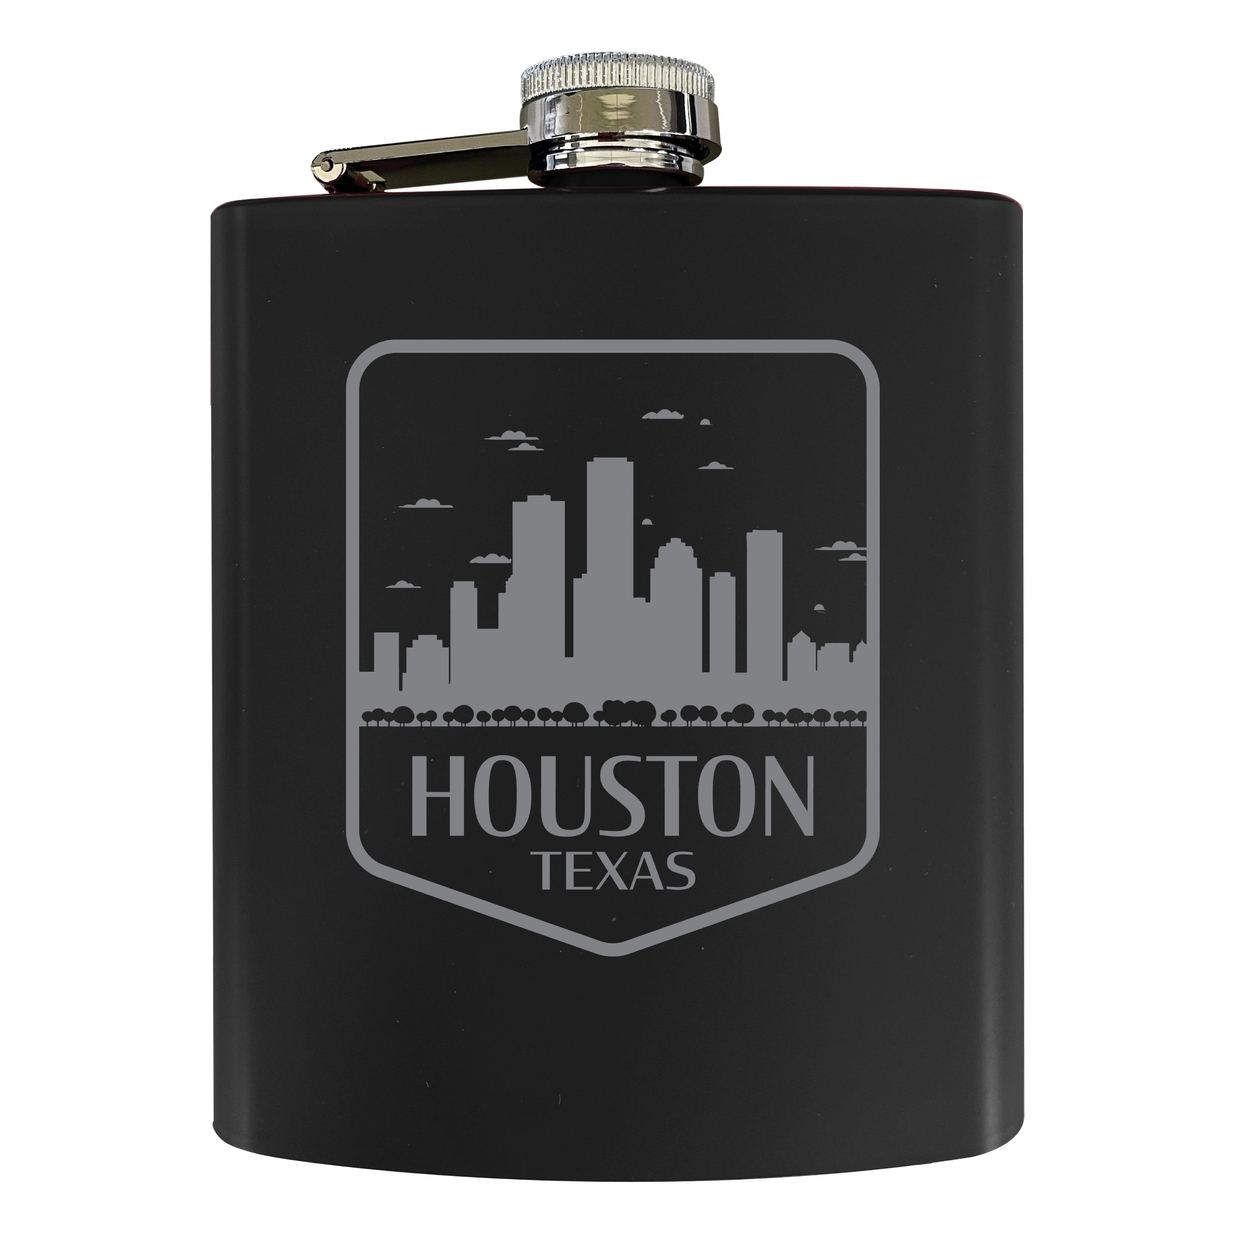 Houston Texas Souvenir 7 Oz Engraved Steel Flask Matte Finish - Black,,4-Pack